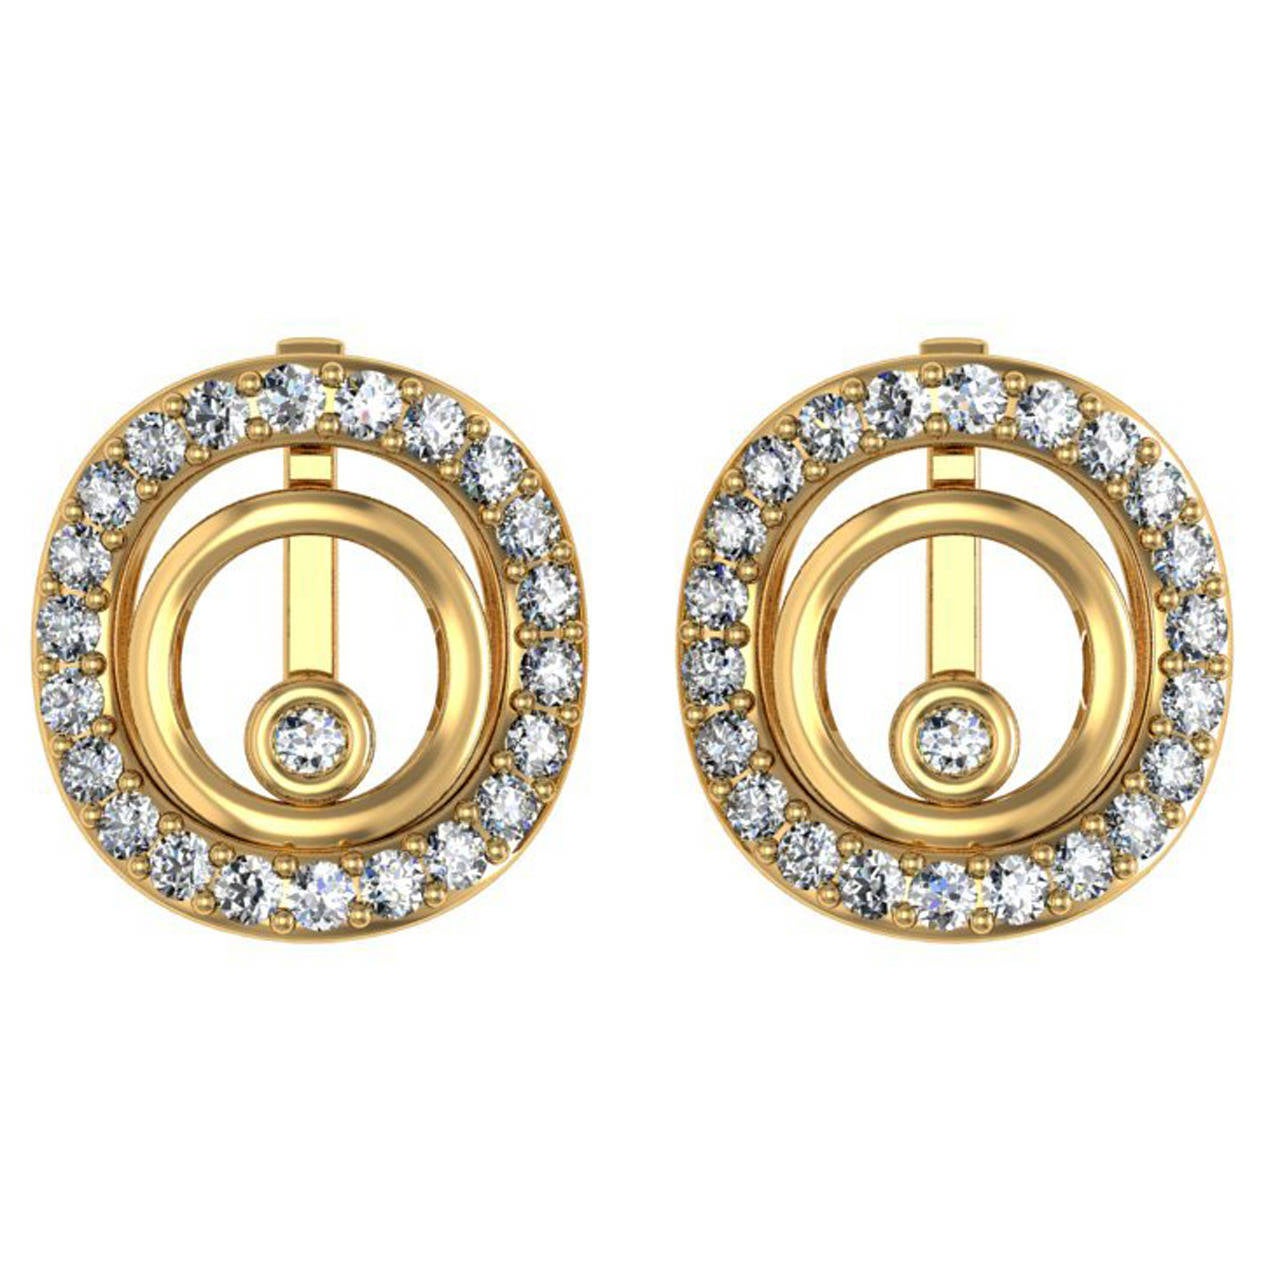 Vasaly Baglaenko & Sparkles Diamond and Gold Earrings For Sale